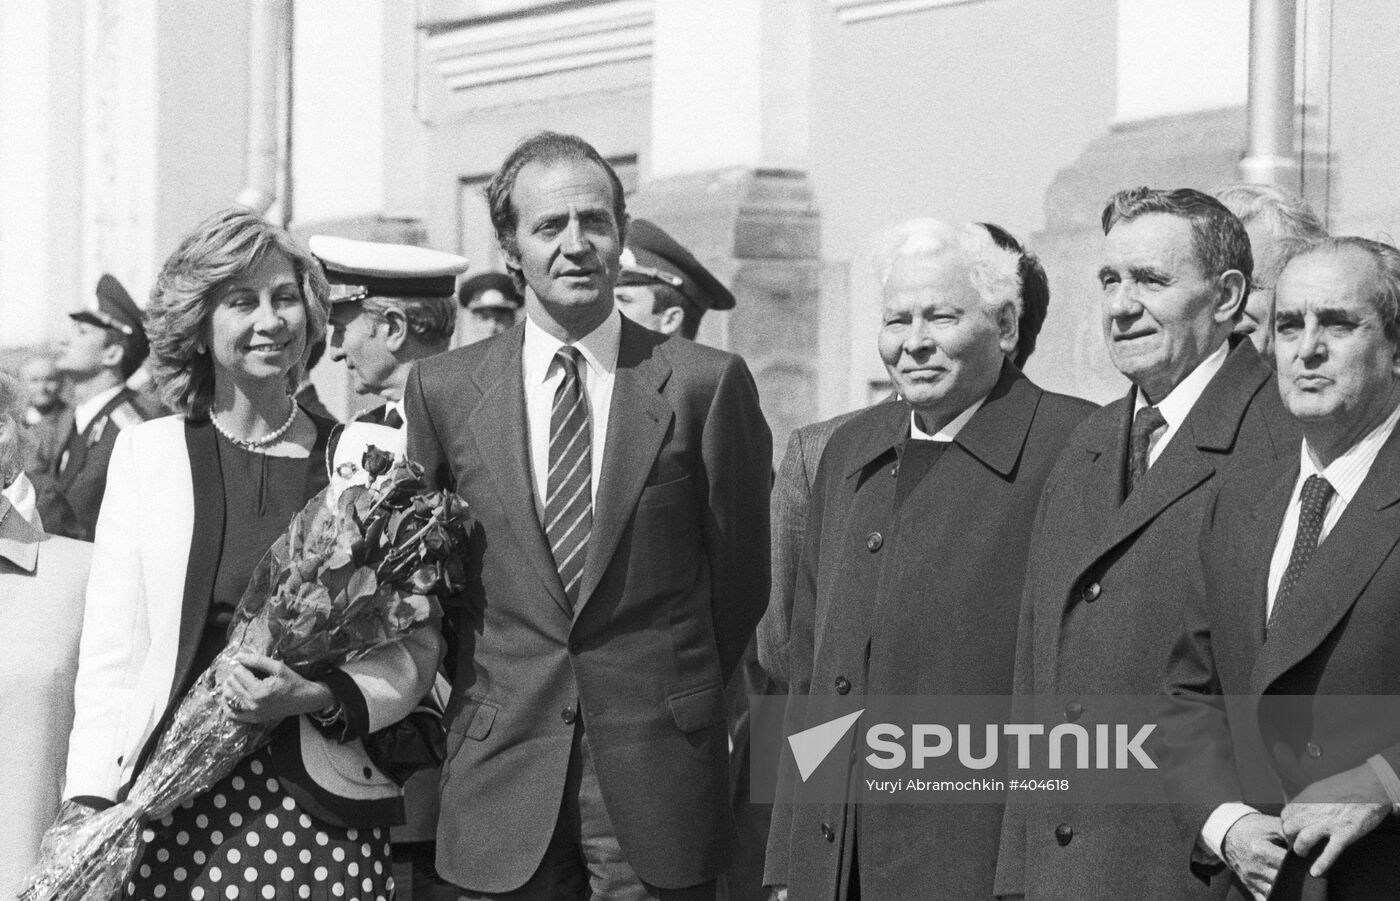 King of Spain Juan Carlos I and Queen Sofia welcomed in Kremlin